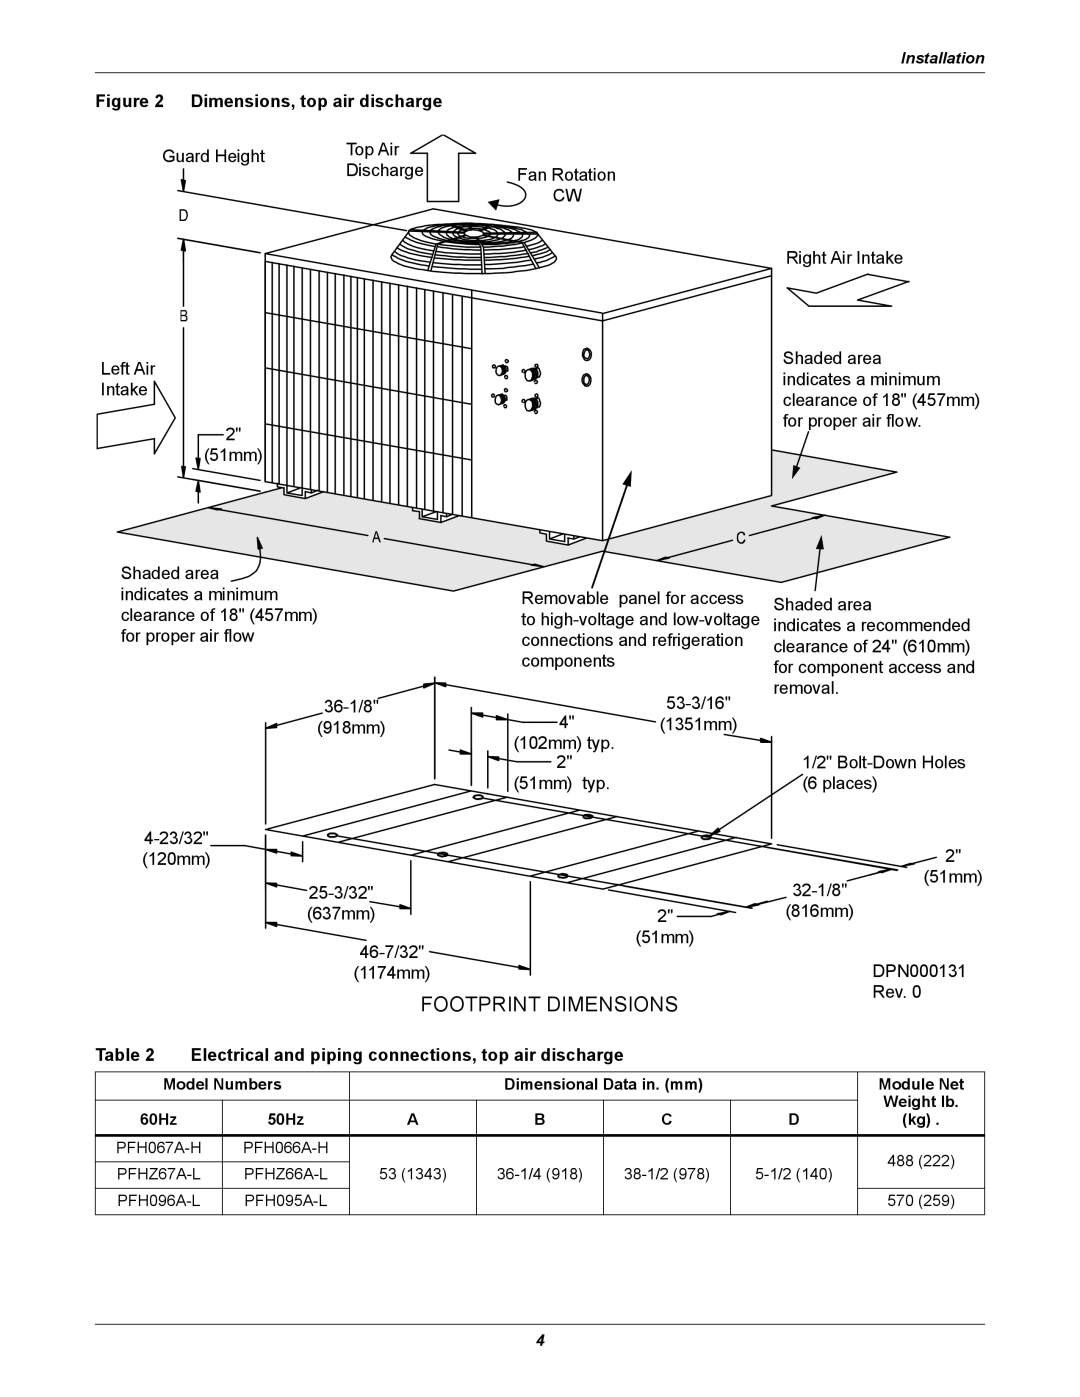 Emerson Figure i manual Footprint Dimensions, Dimensions, top air discharge 